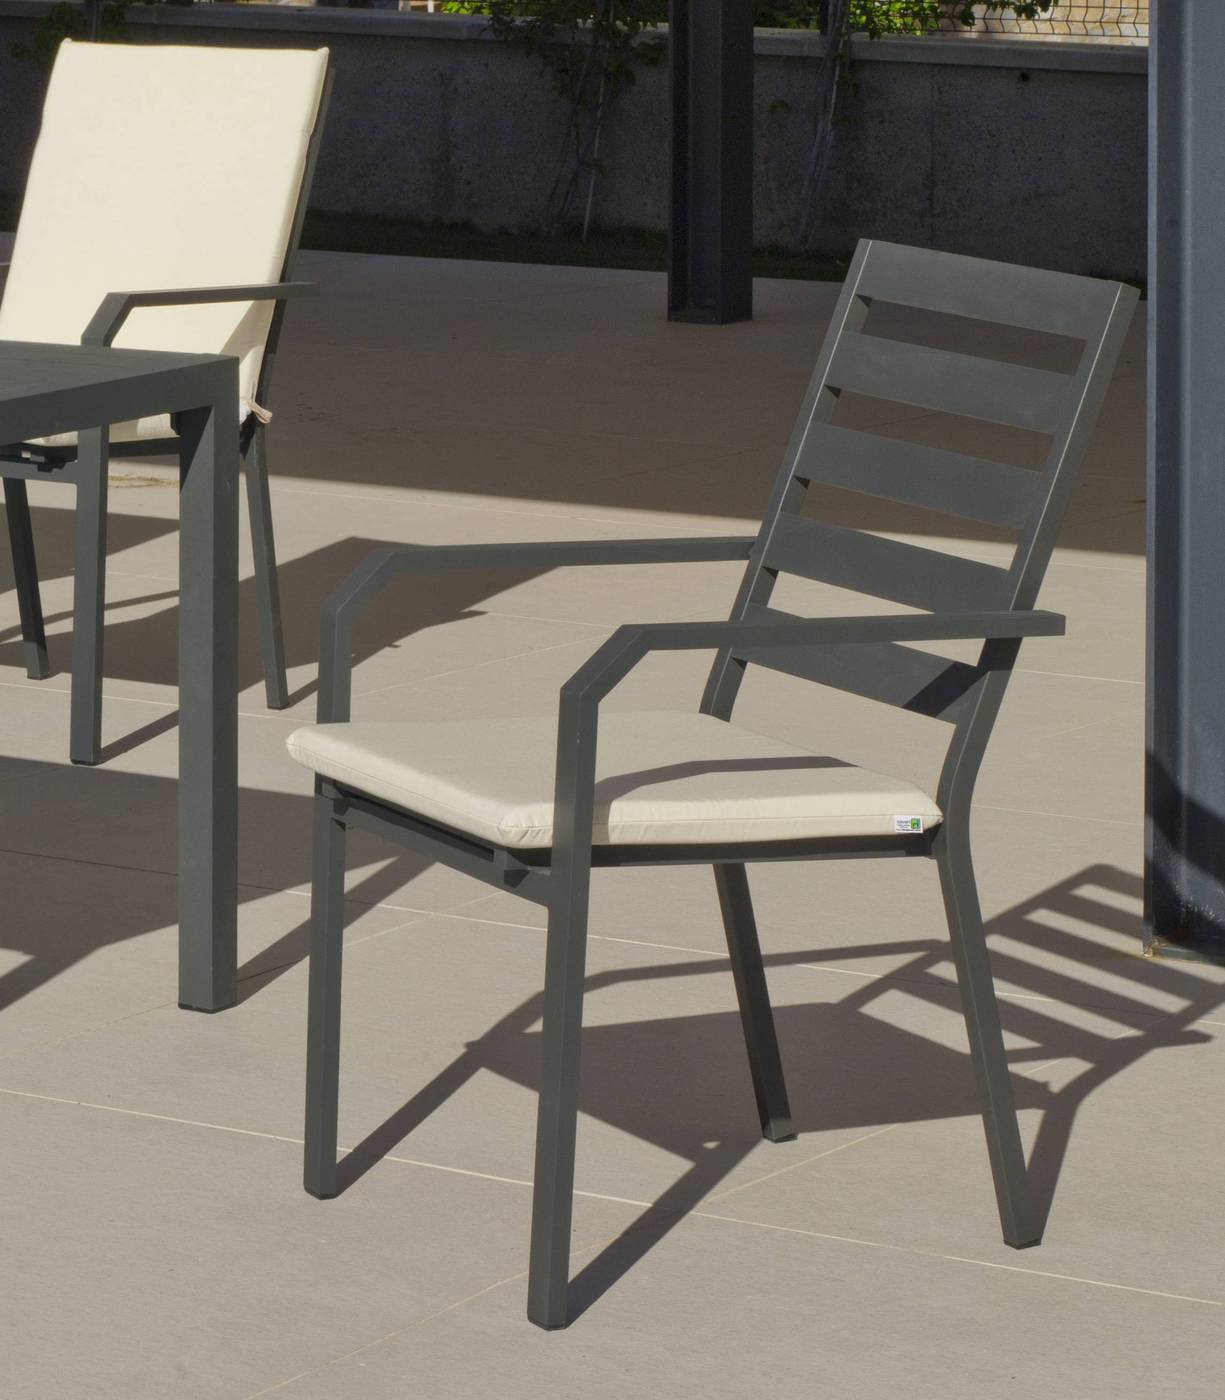 Set Aluminio HPL Palma 150-6 - Conjunto para jardín color blanco, antracita, champagne, plata o marrón: Mesa de aluminio con tablero laminado HPL + 6 sillones.